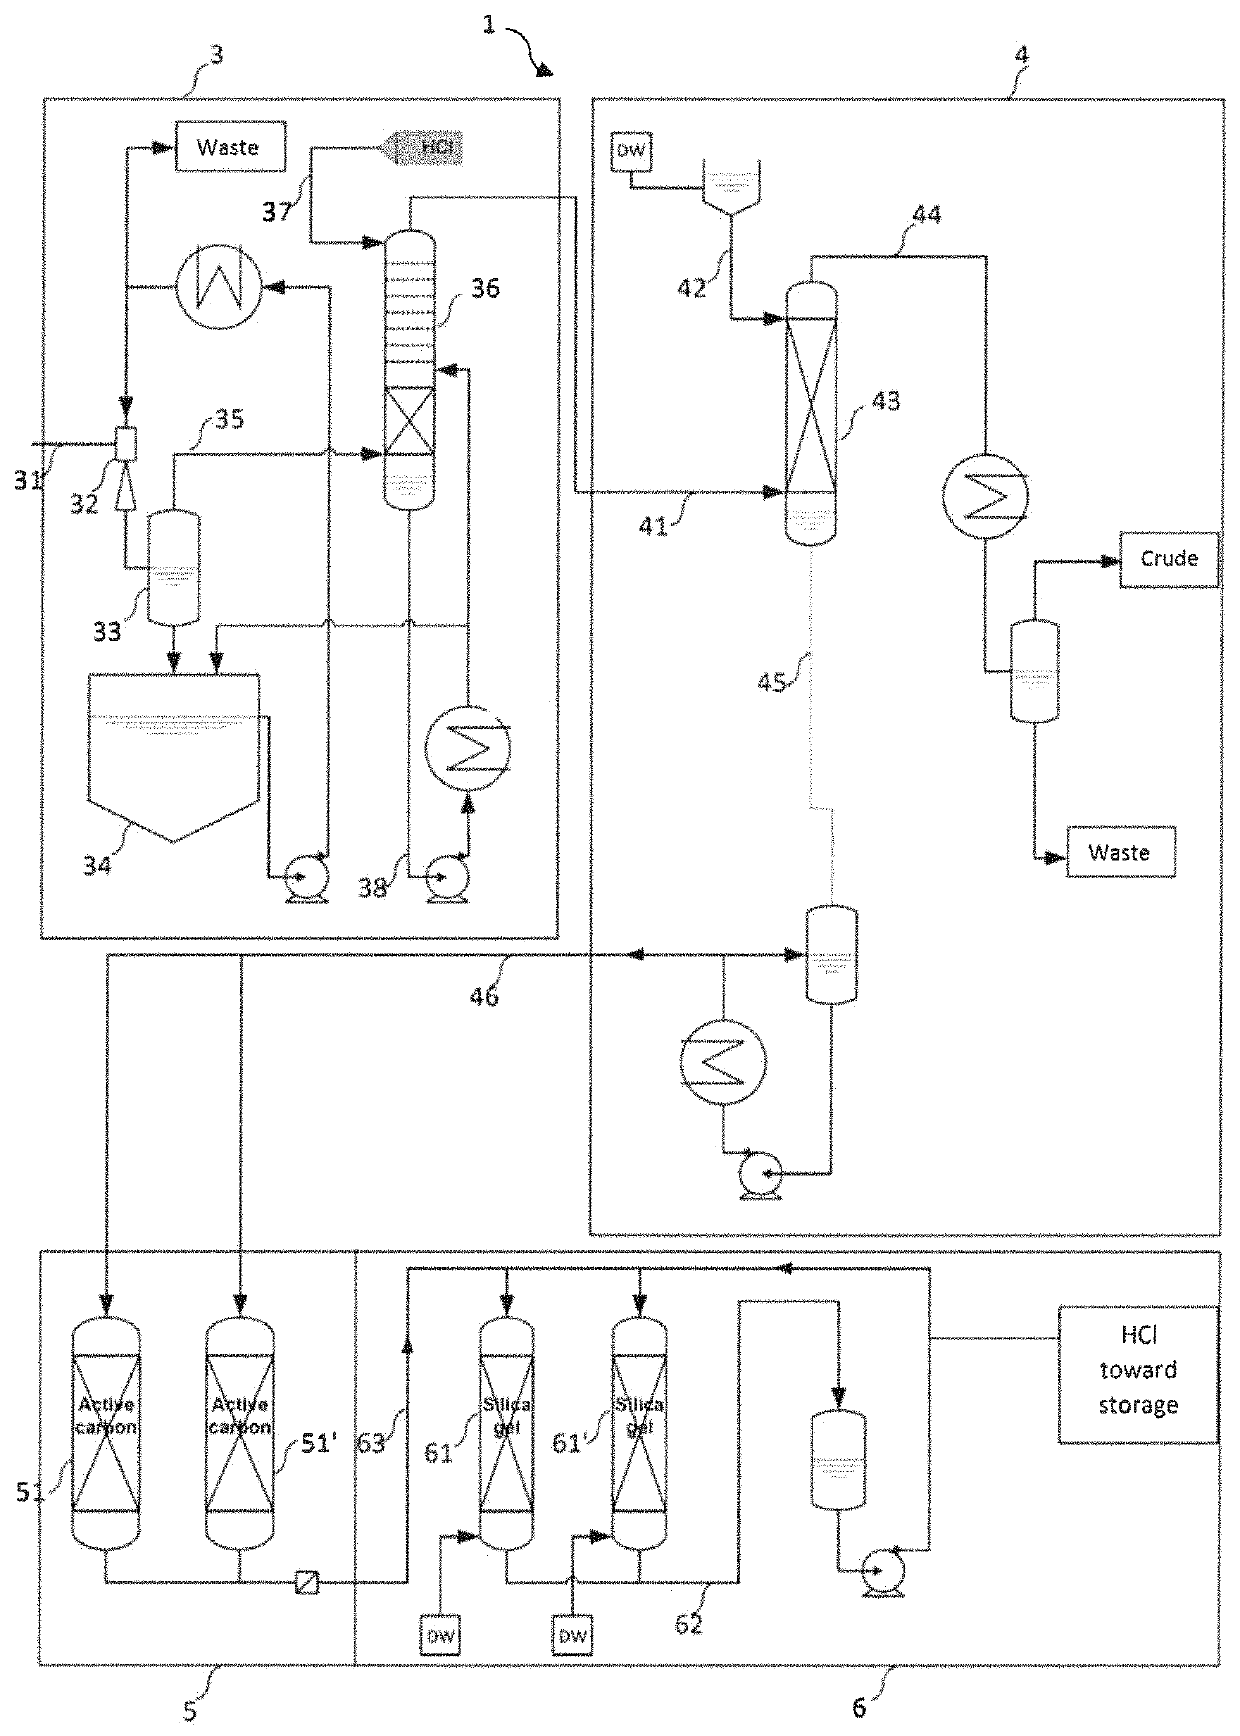 Hydrochloric acid purification process and plant